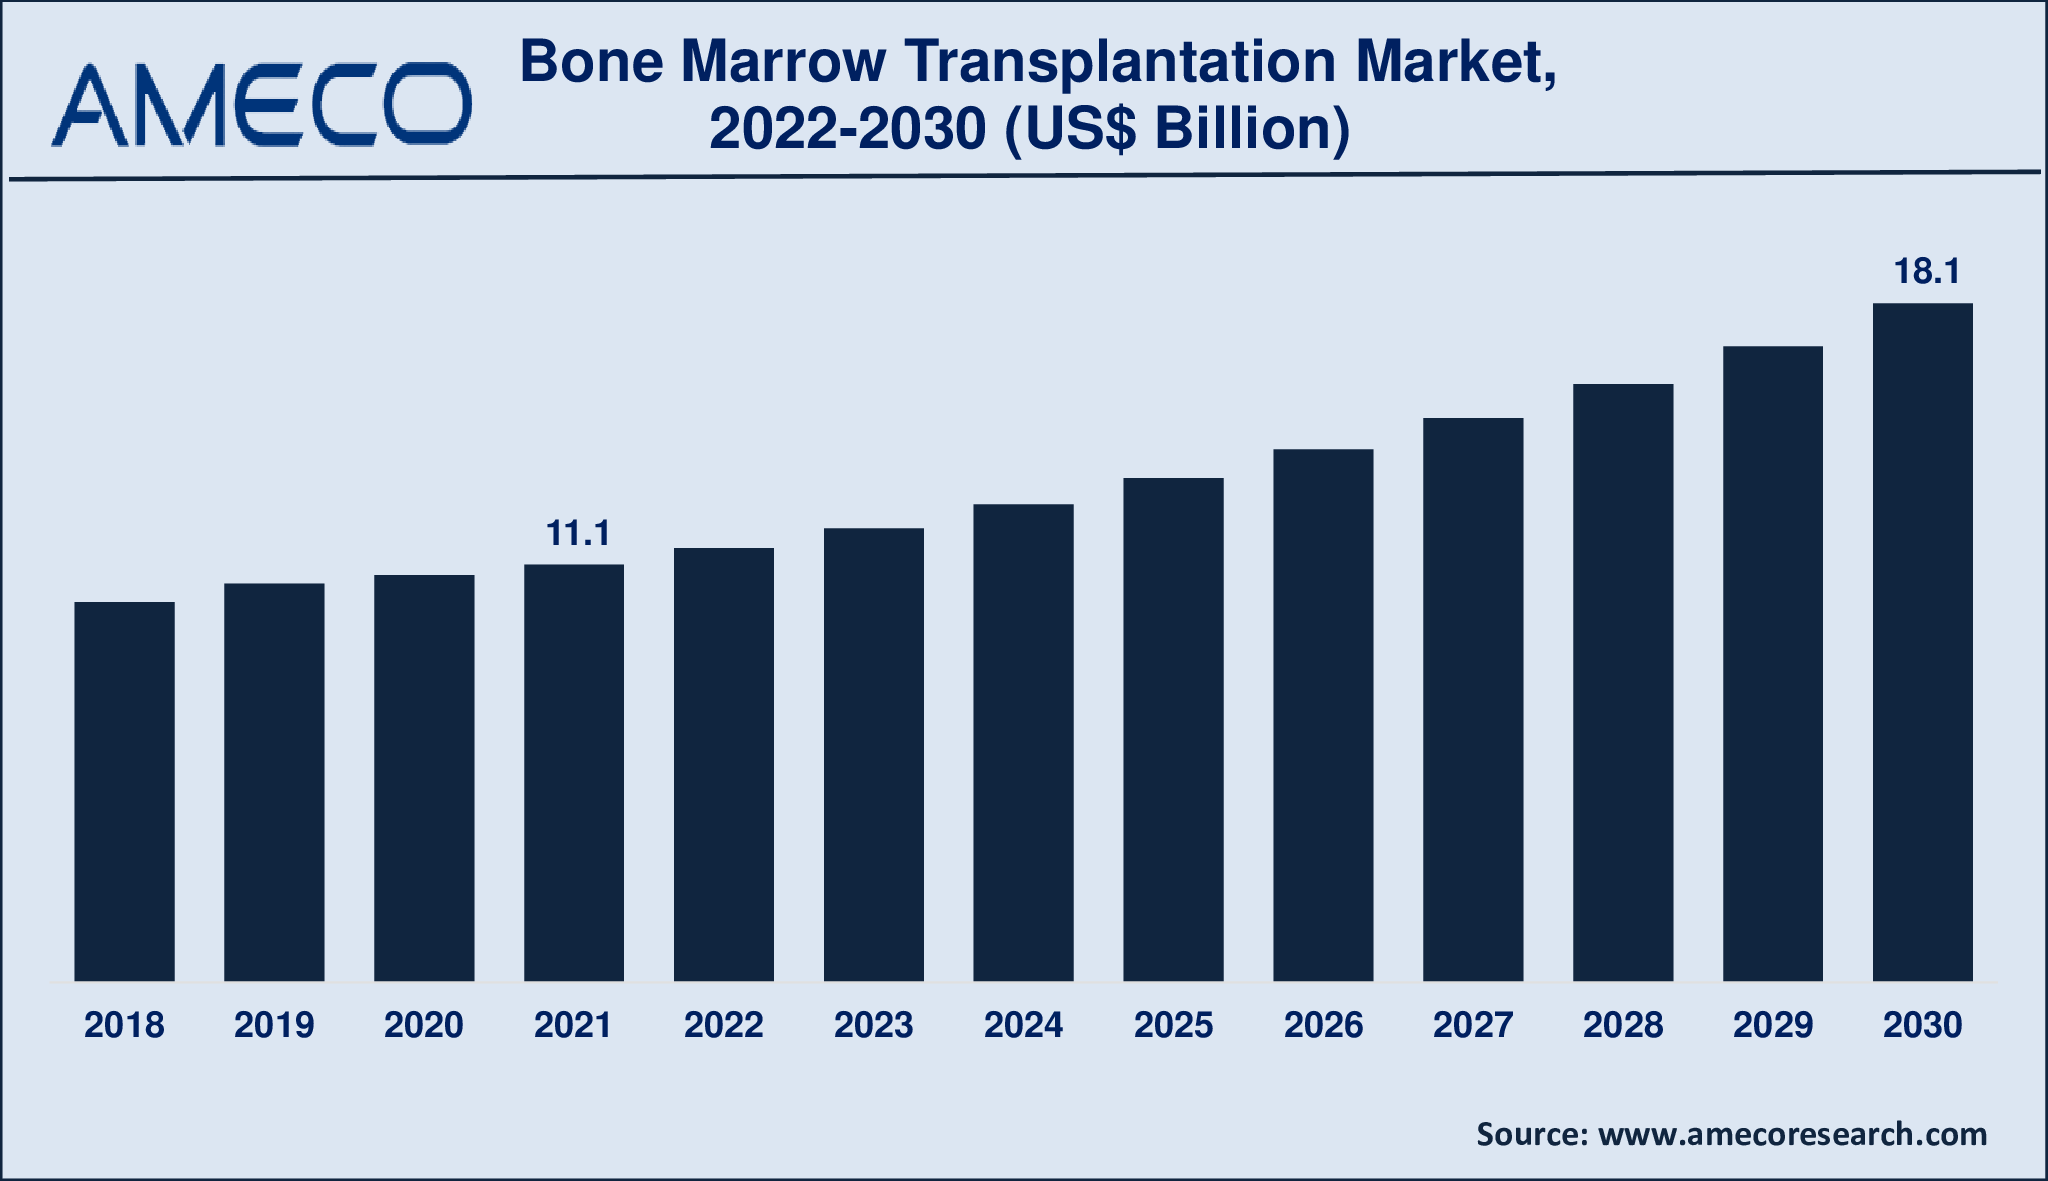 Bone Marrow Transplantation Market Size, Share, Growth, Trends, and Forecast 2022-2030